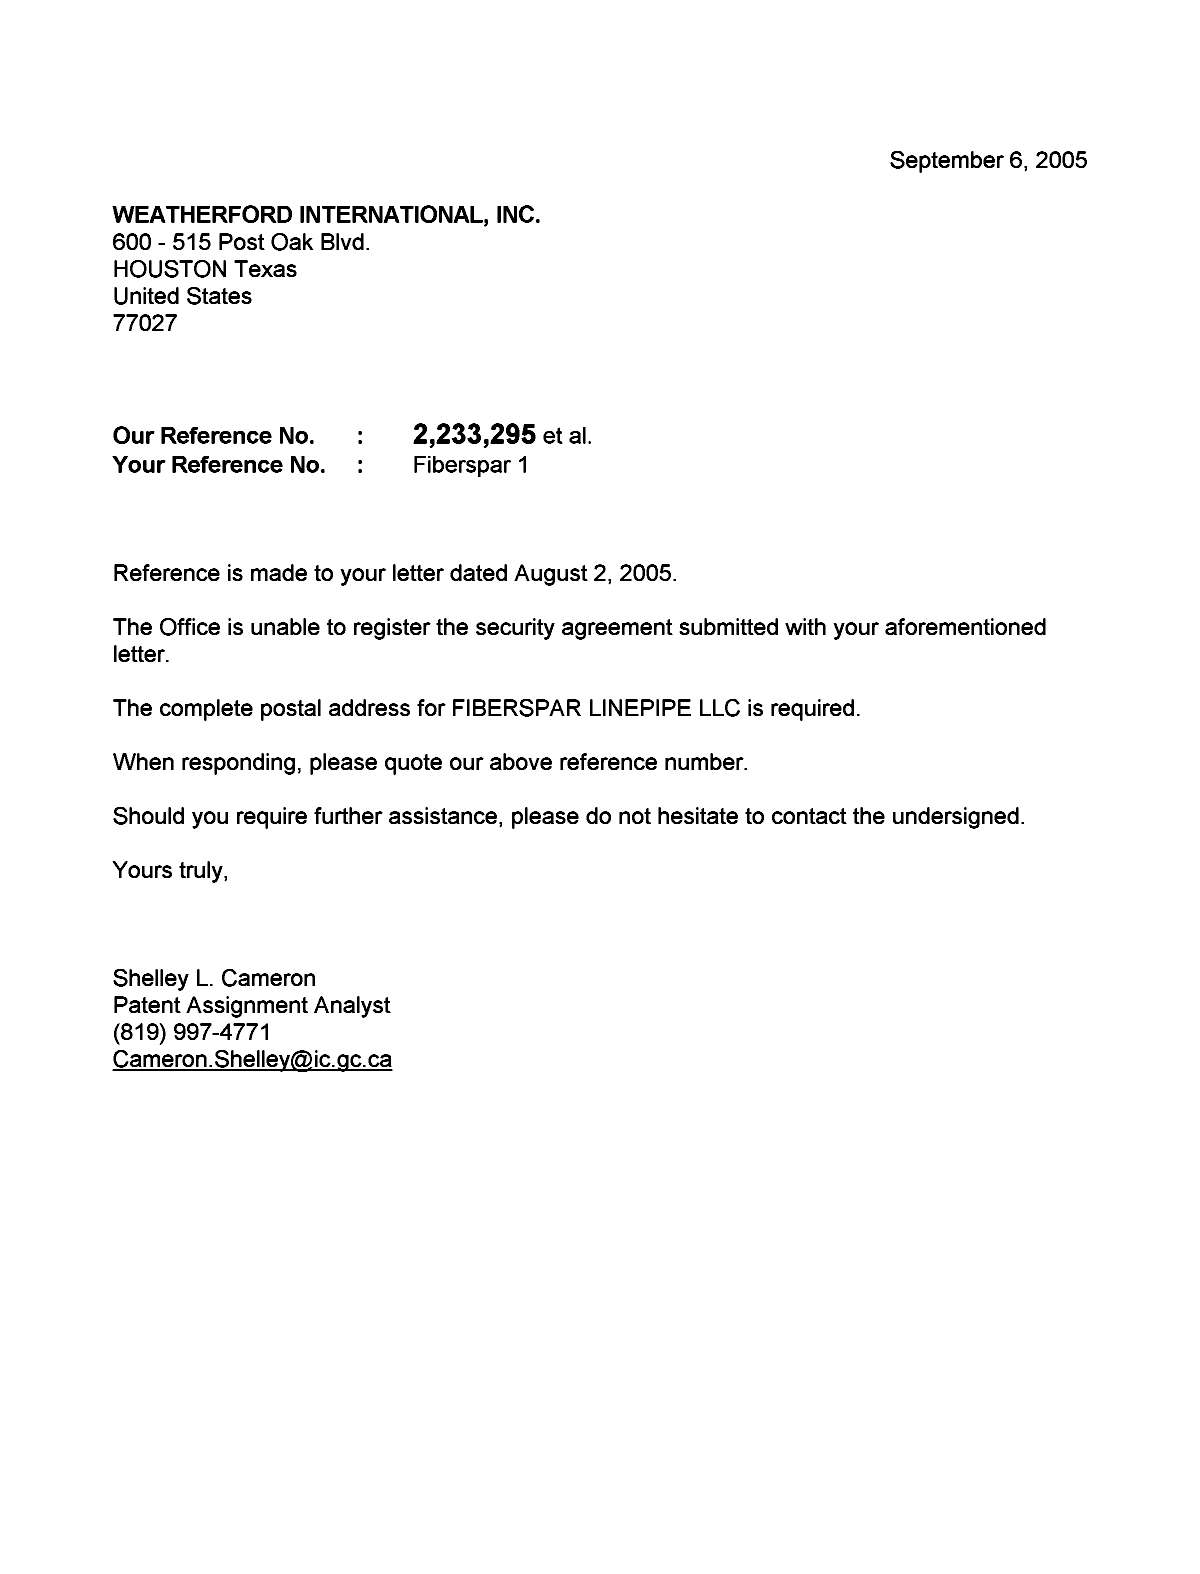 Canadian Patent Document 2409304. Correspondence 20050906. Image 1 of 1